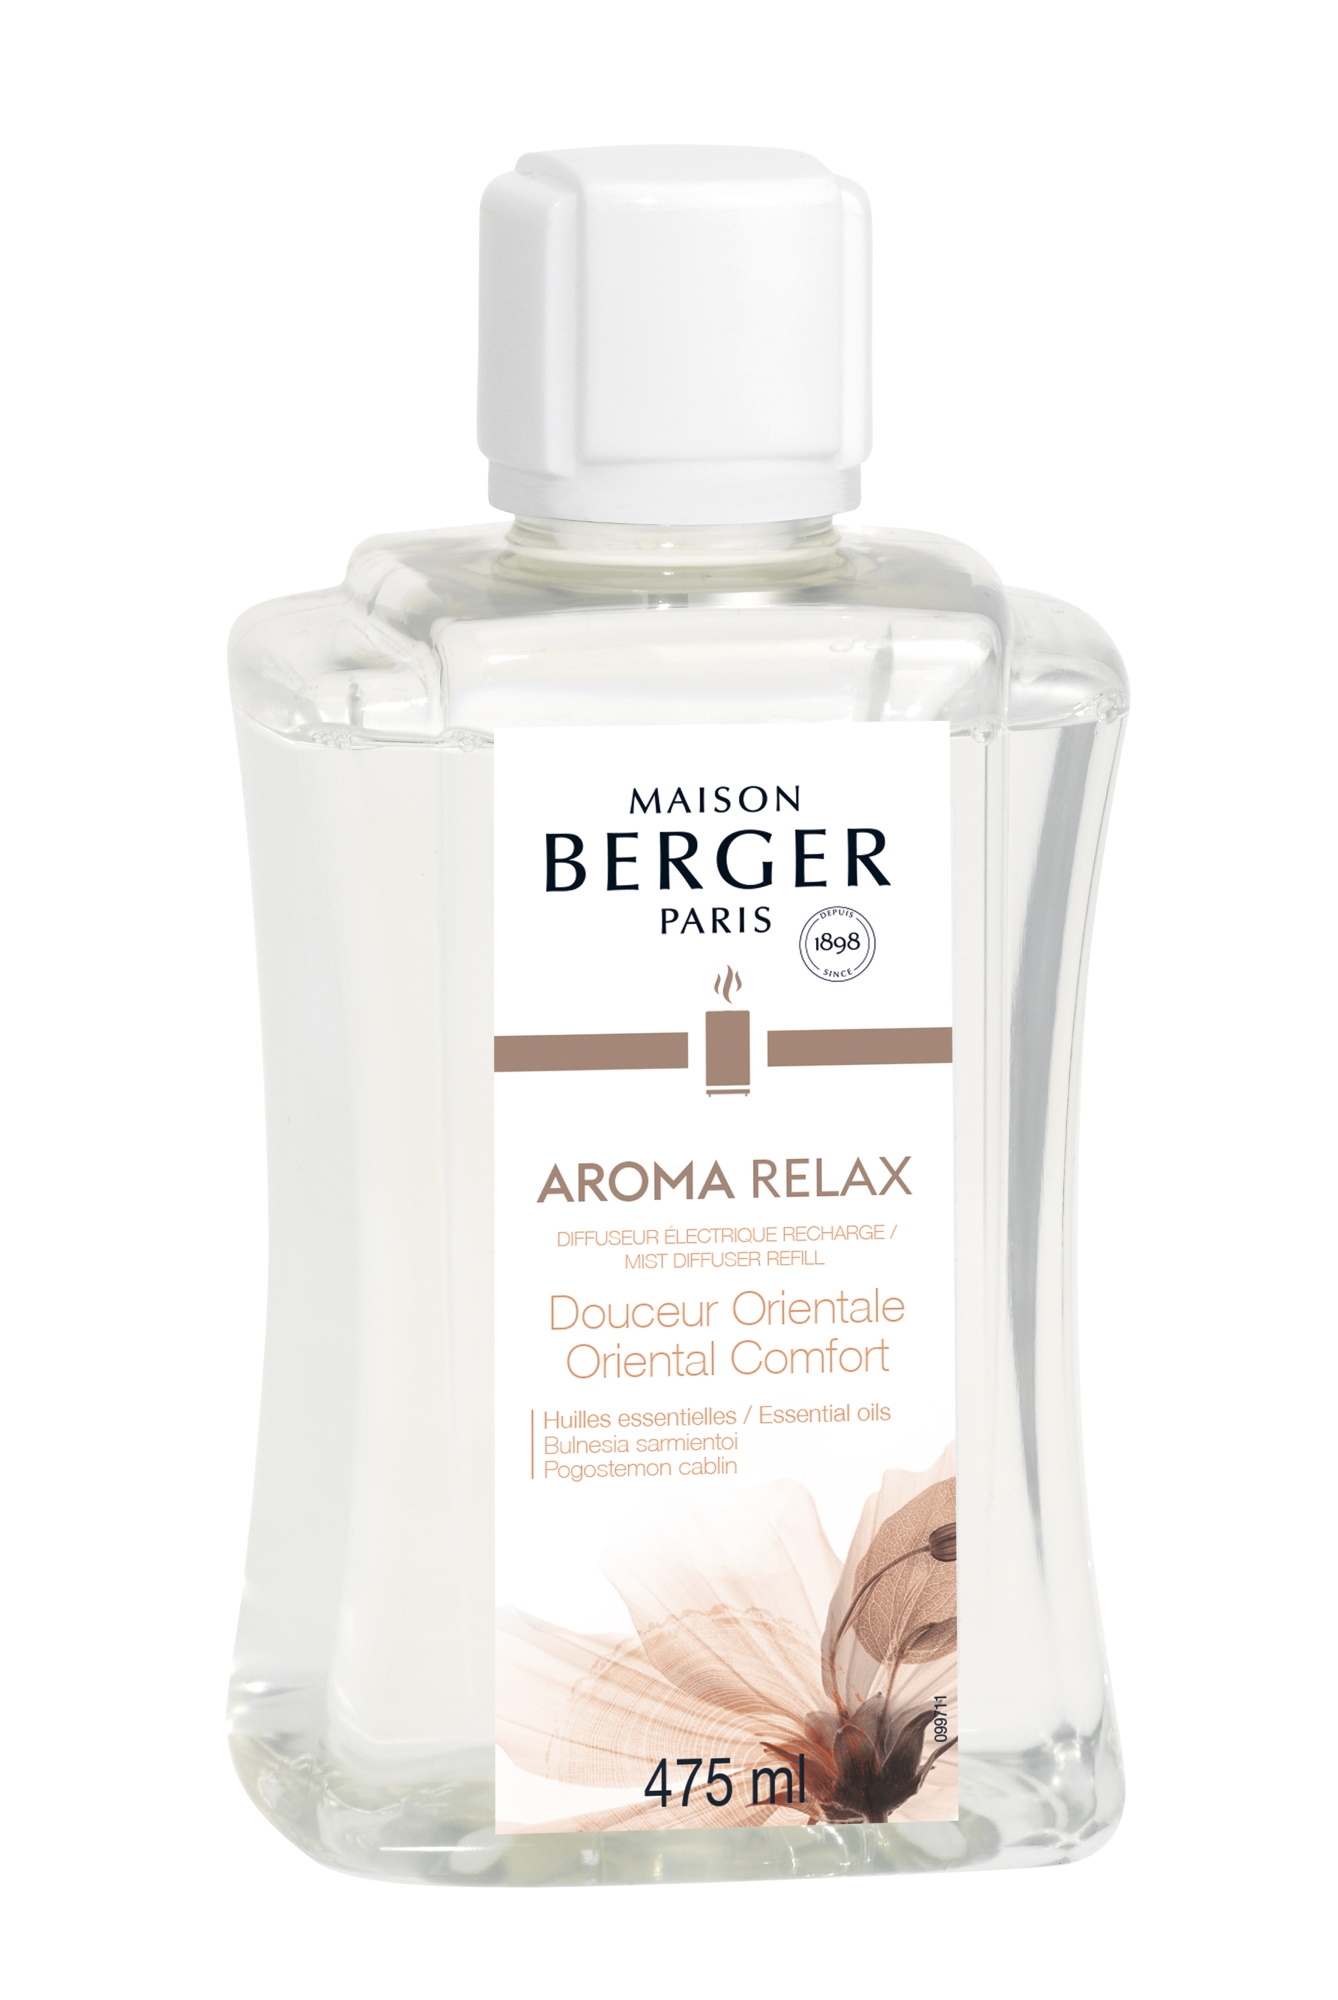 Parfum pentru difuzor ultrasonic Berger Aroma Relax – Douceur Orientale 475ml Maison Berger pret redus imagine 2022